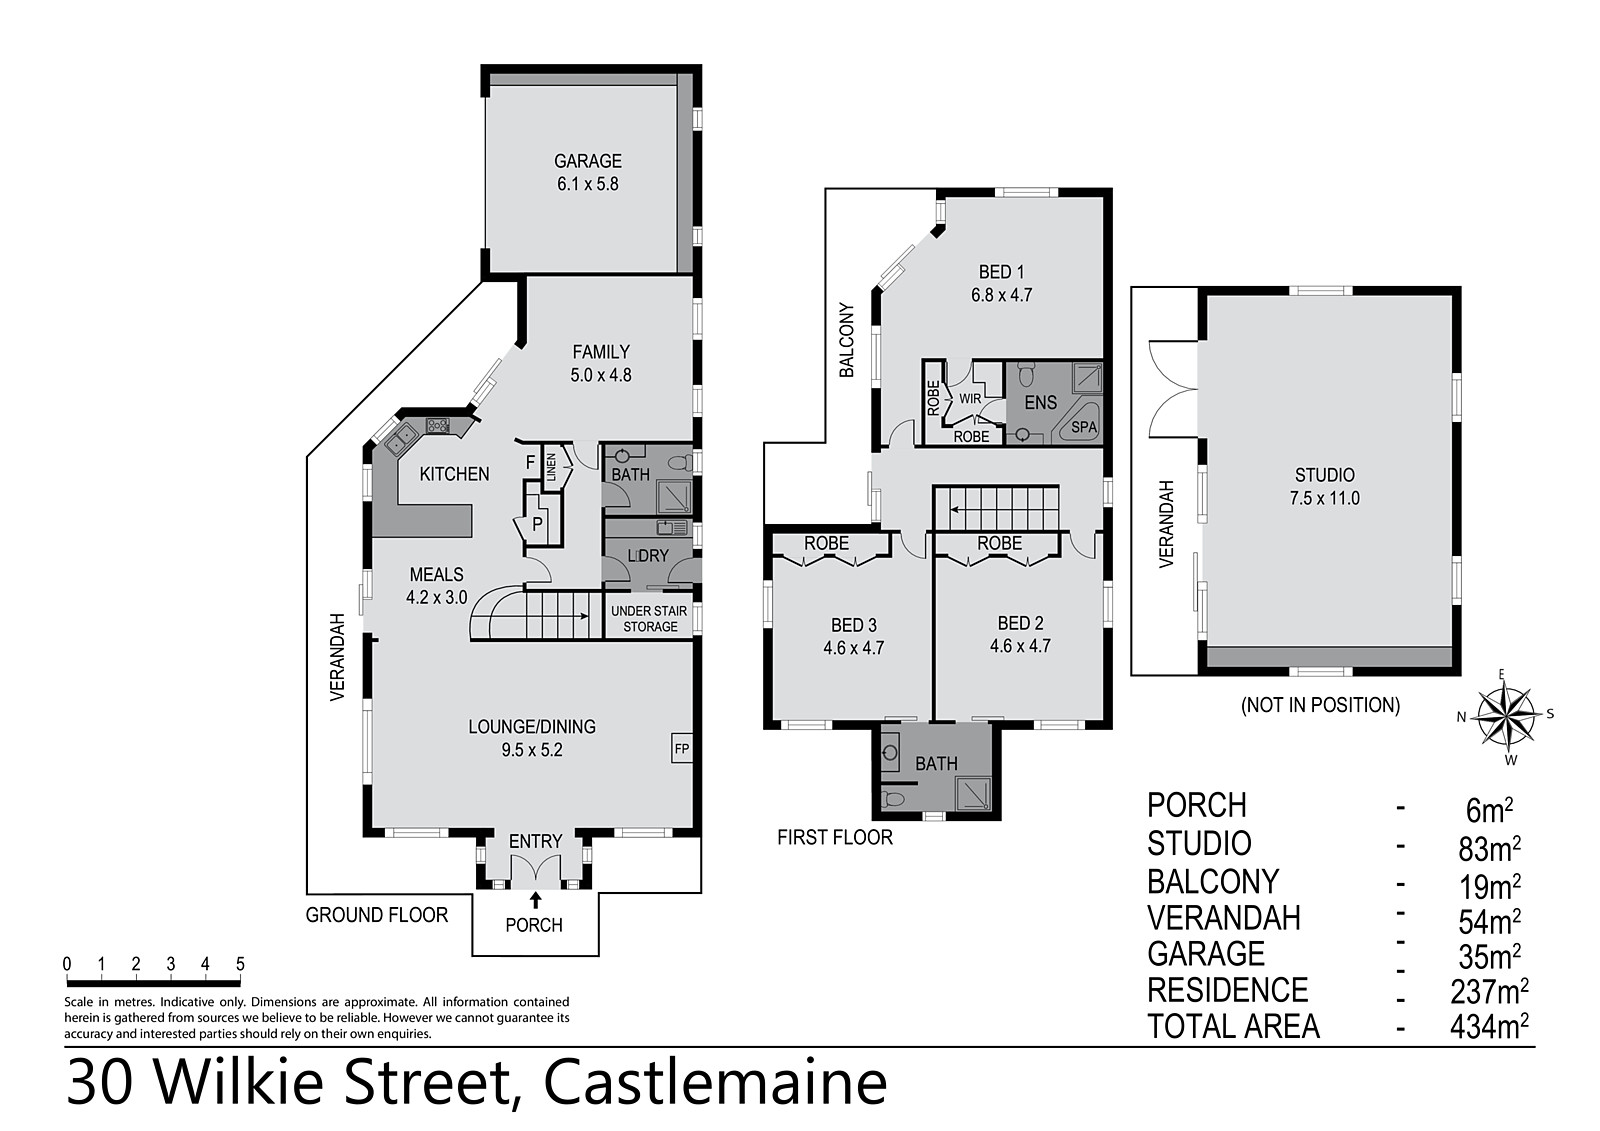 30 Wilkie Street Castlemaine House For Sale 812176 Jellis Craig